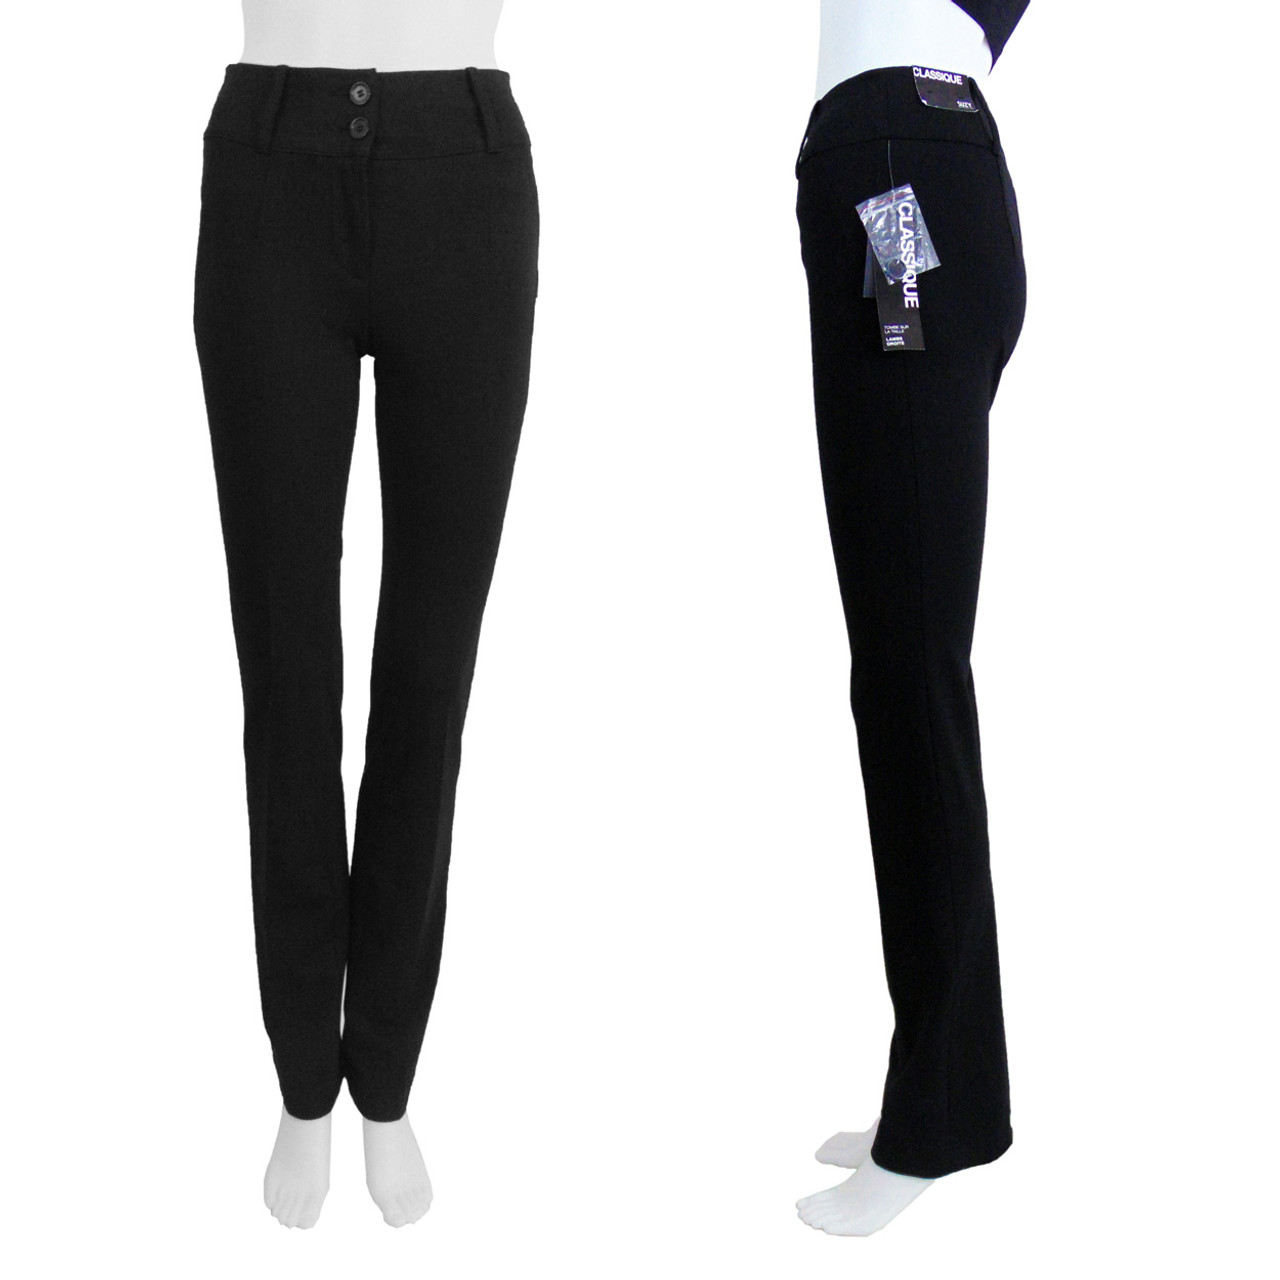 Suzy Shier Classic Black Straight Leg Pants - Size 0